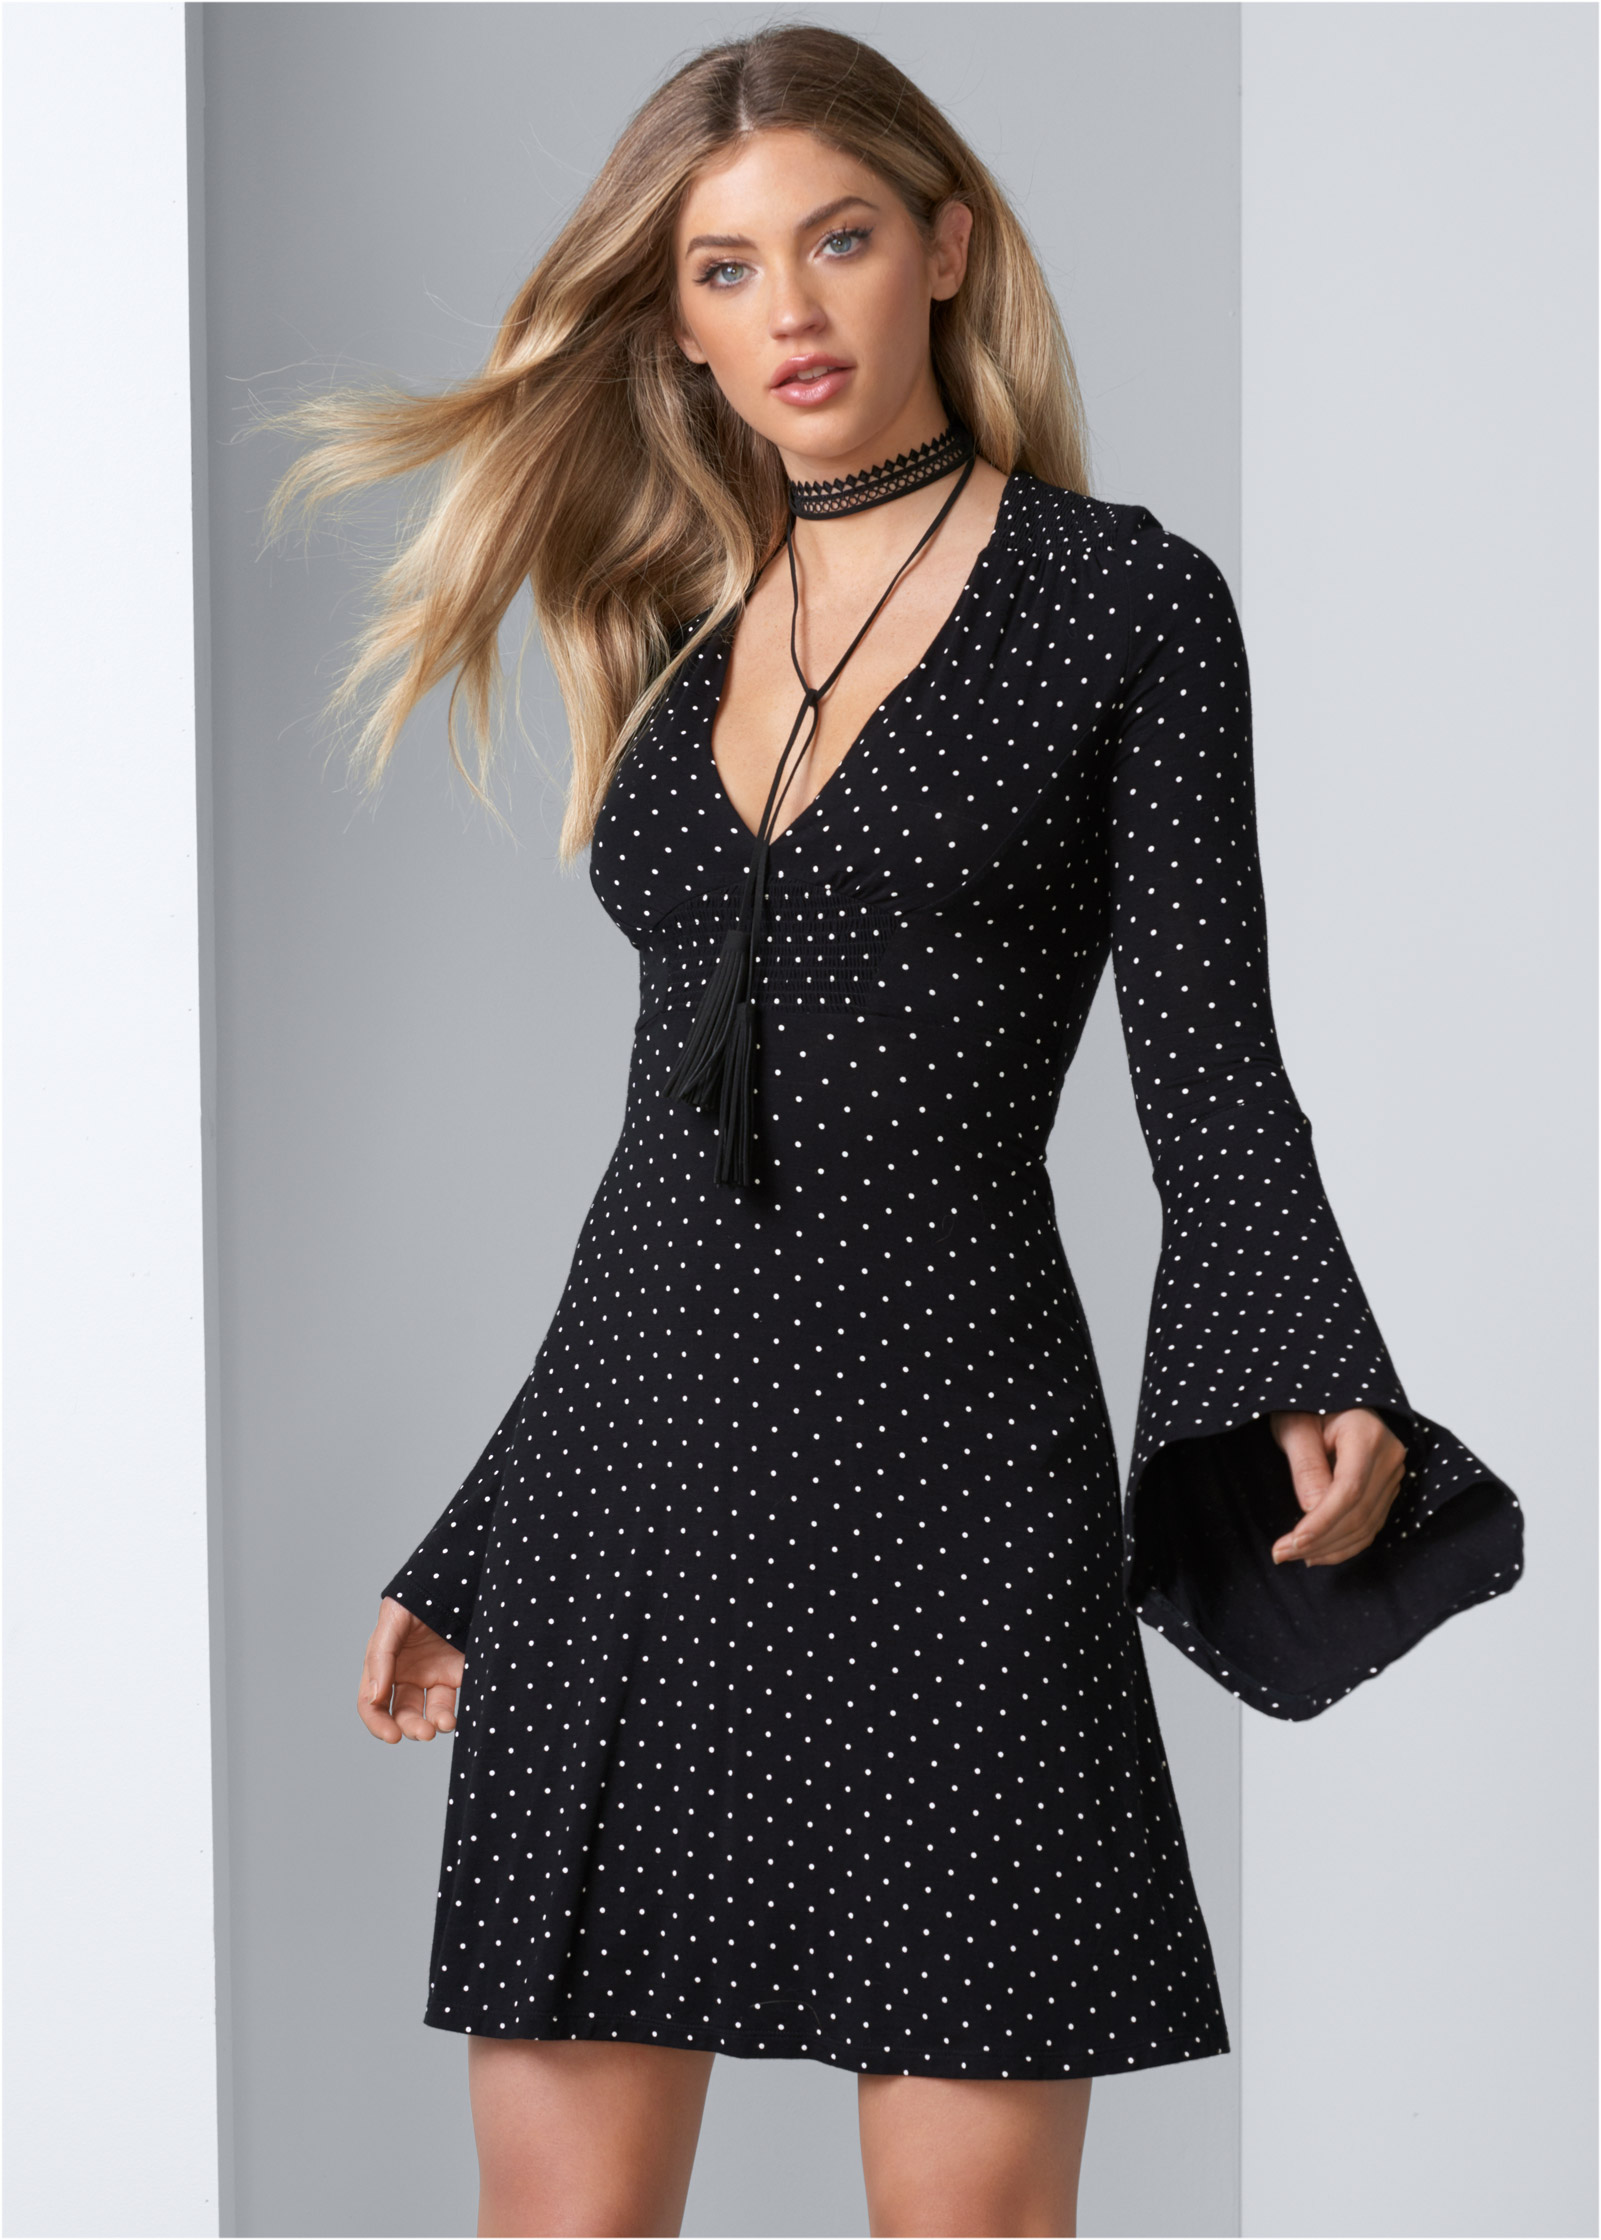 black dress with polka dot sleeves